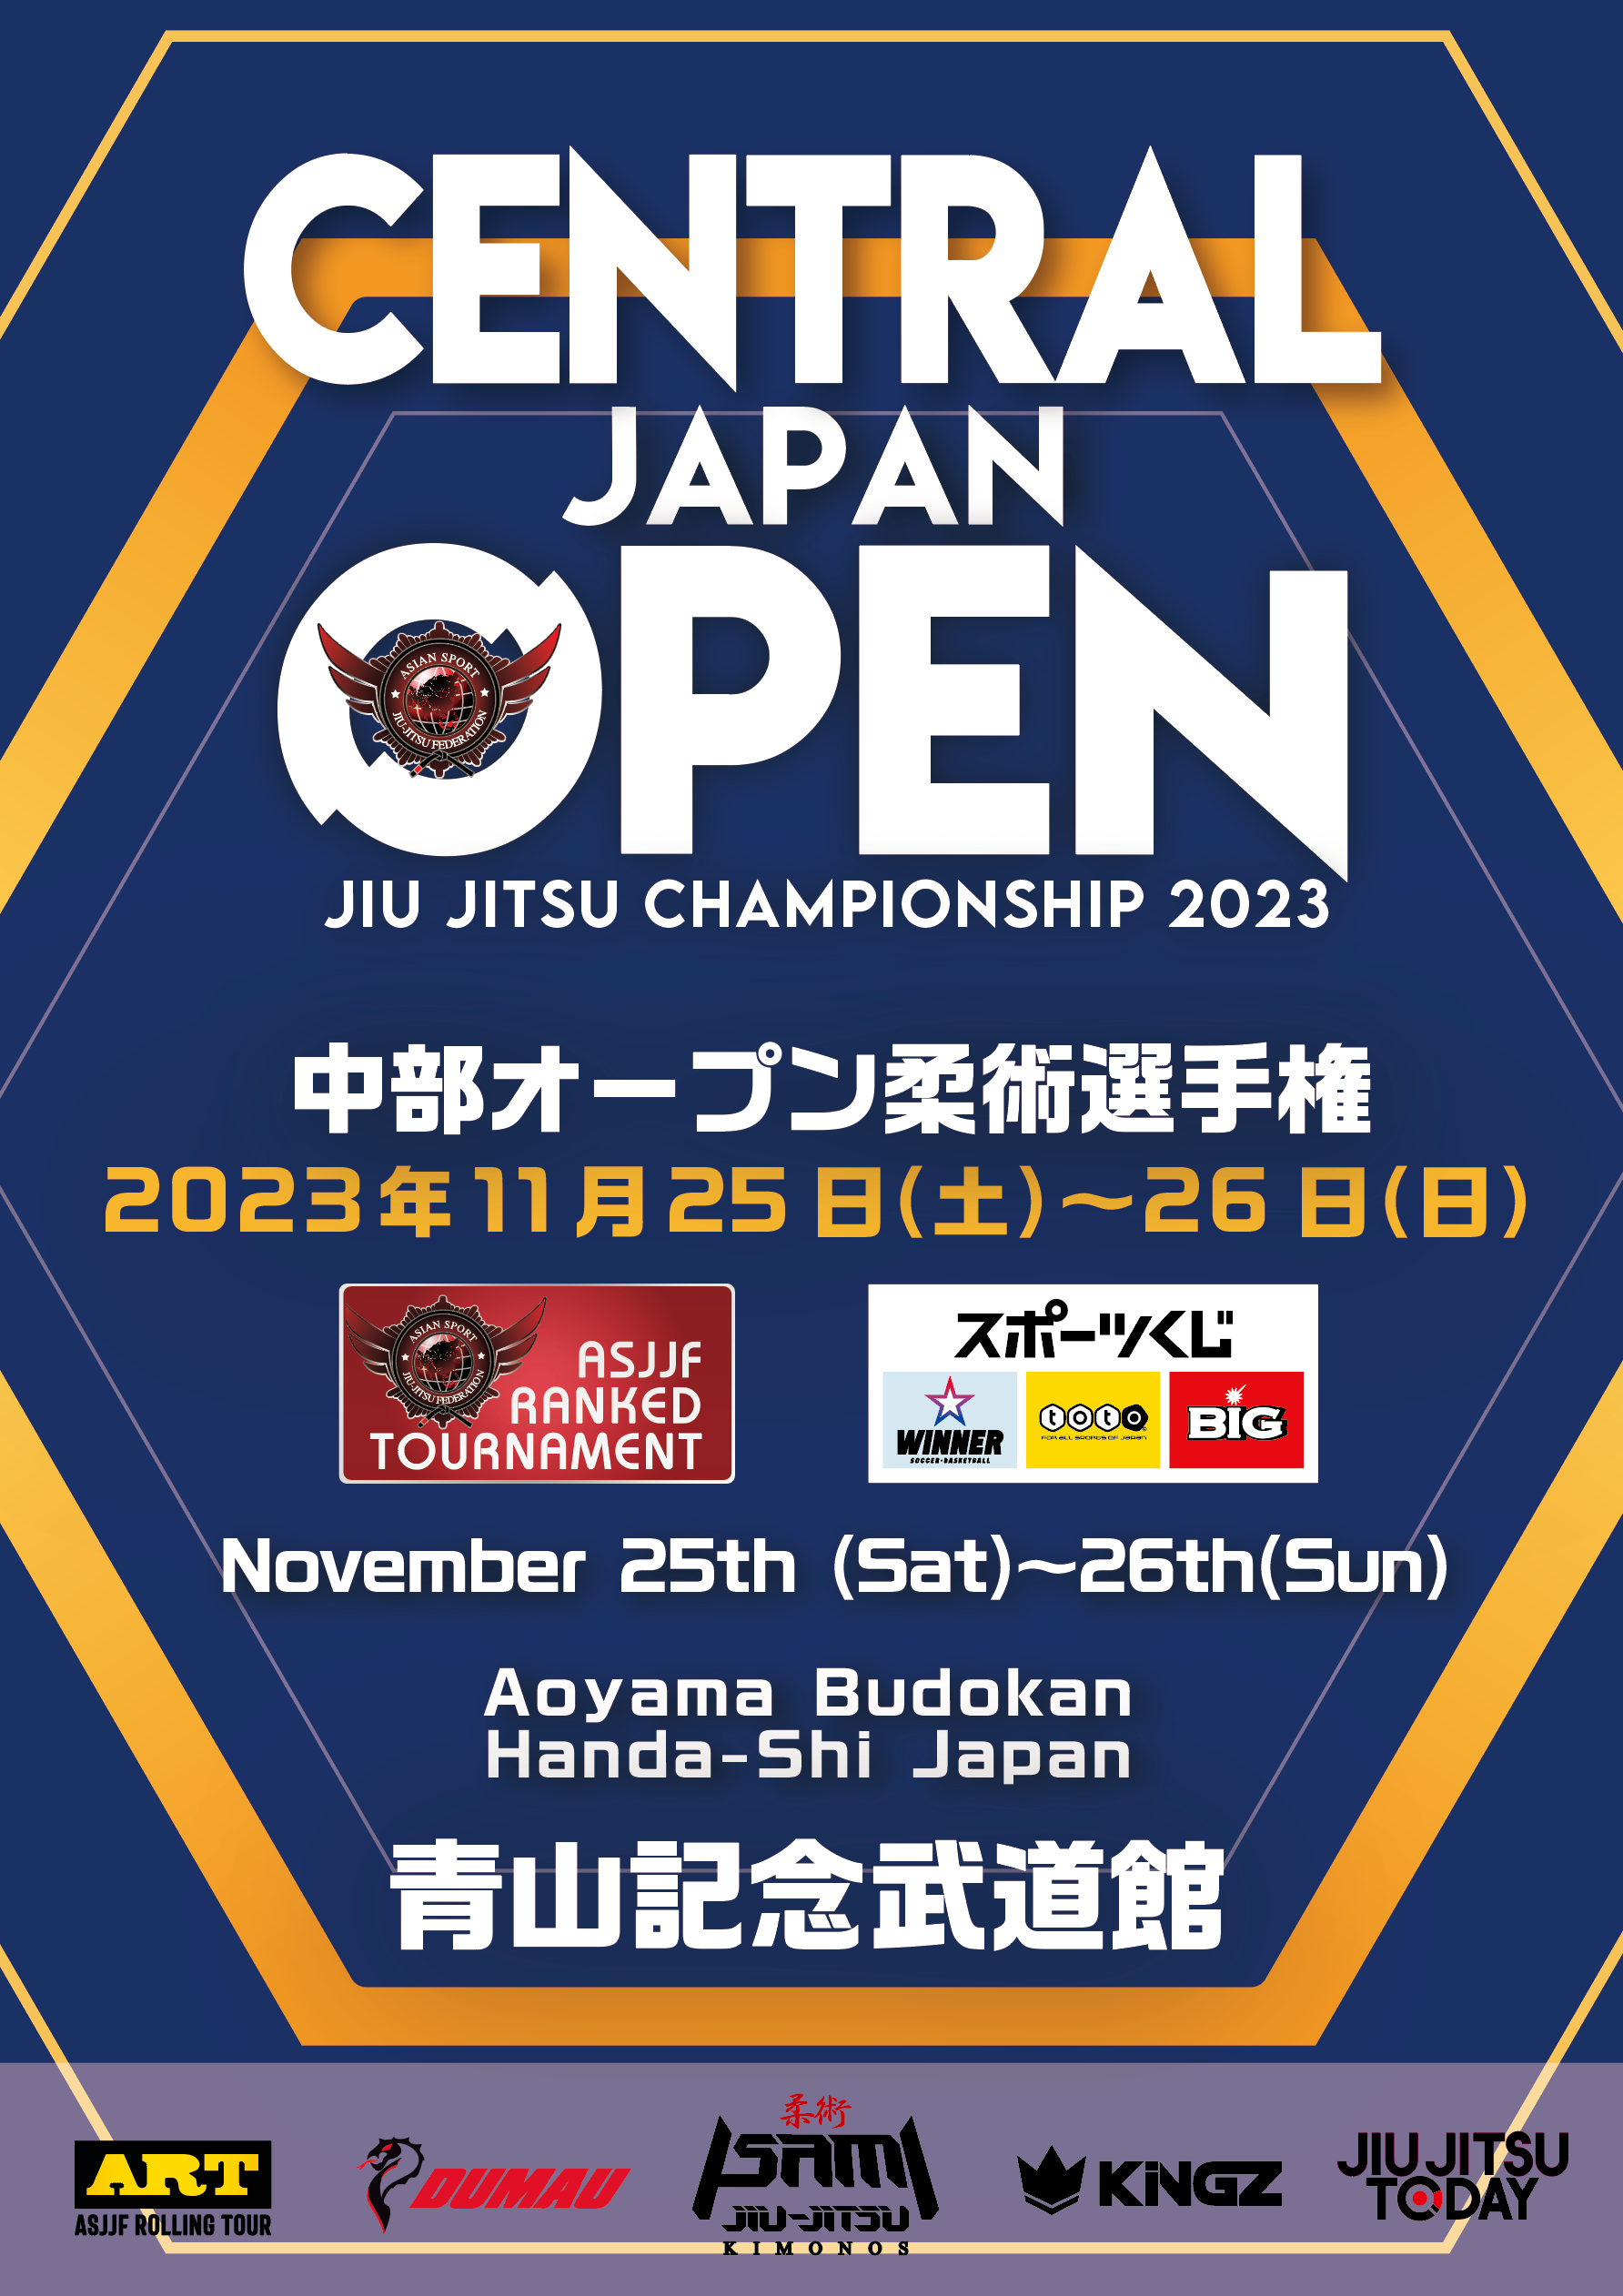 Central Japan Open Jiu Jitsu Championship 2023